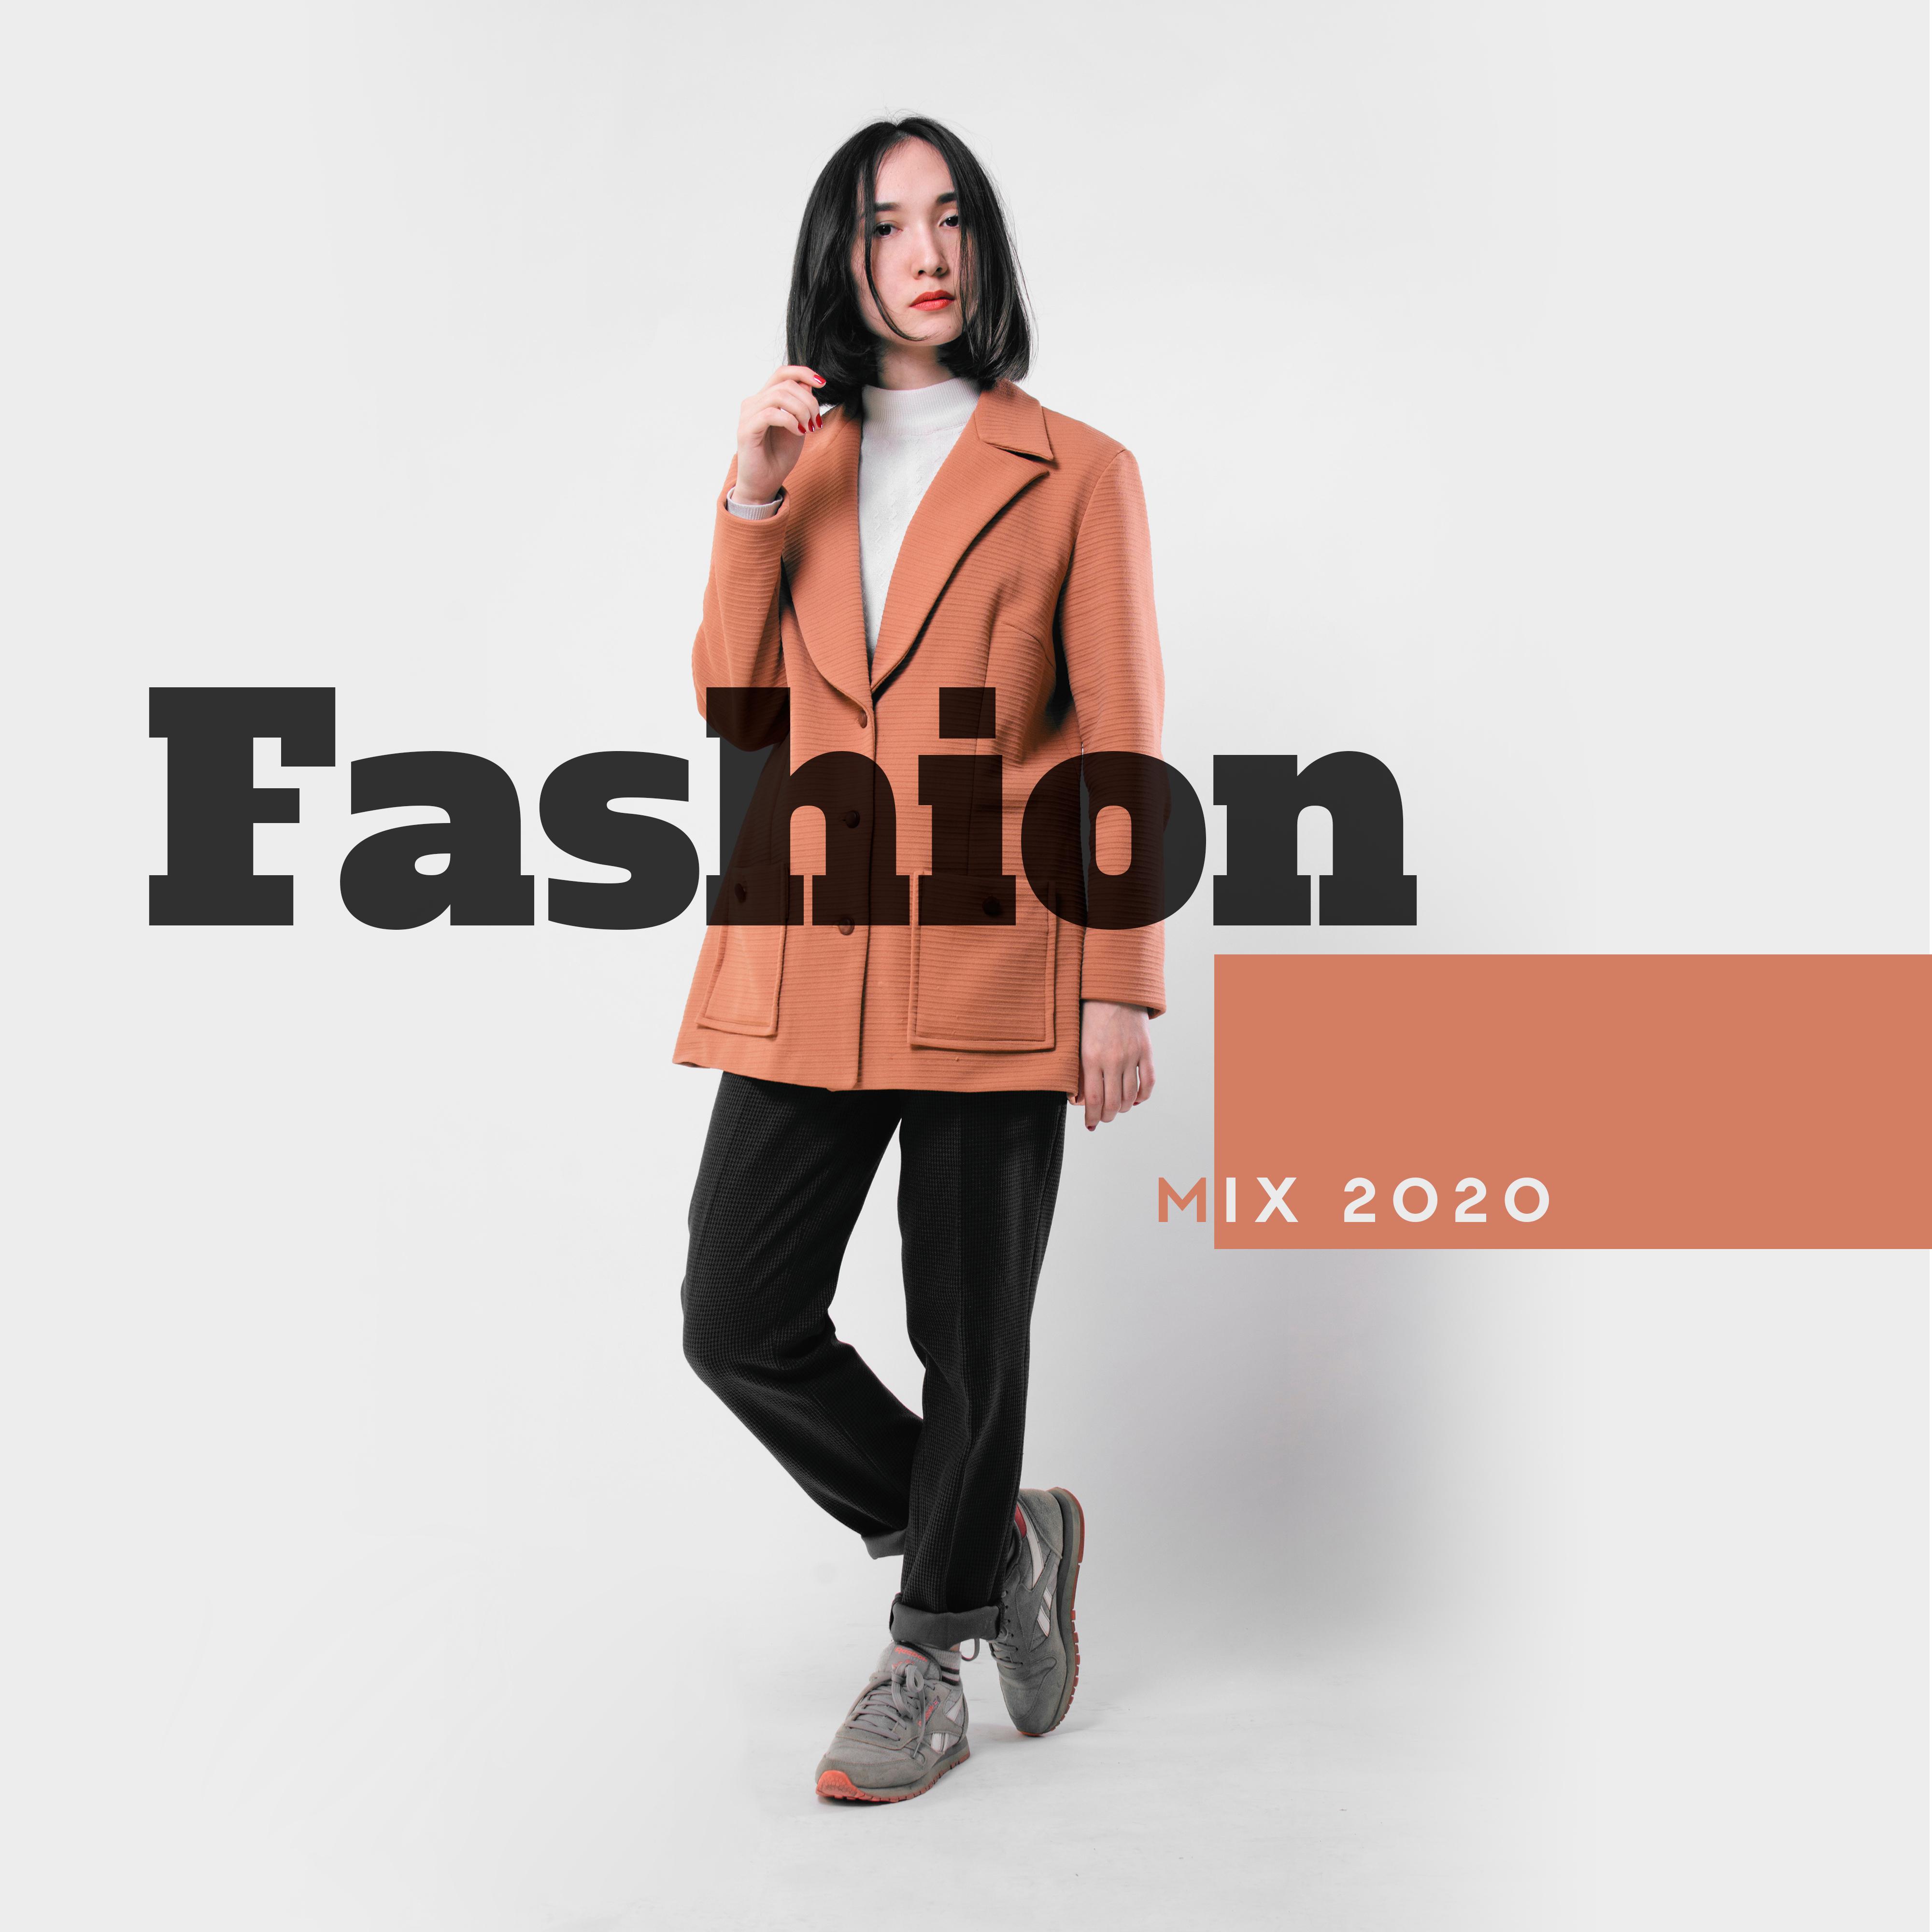 Fashion Mix 2020: Best Runway Music 2020